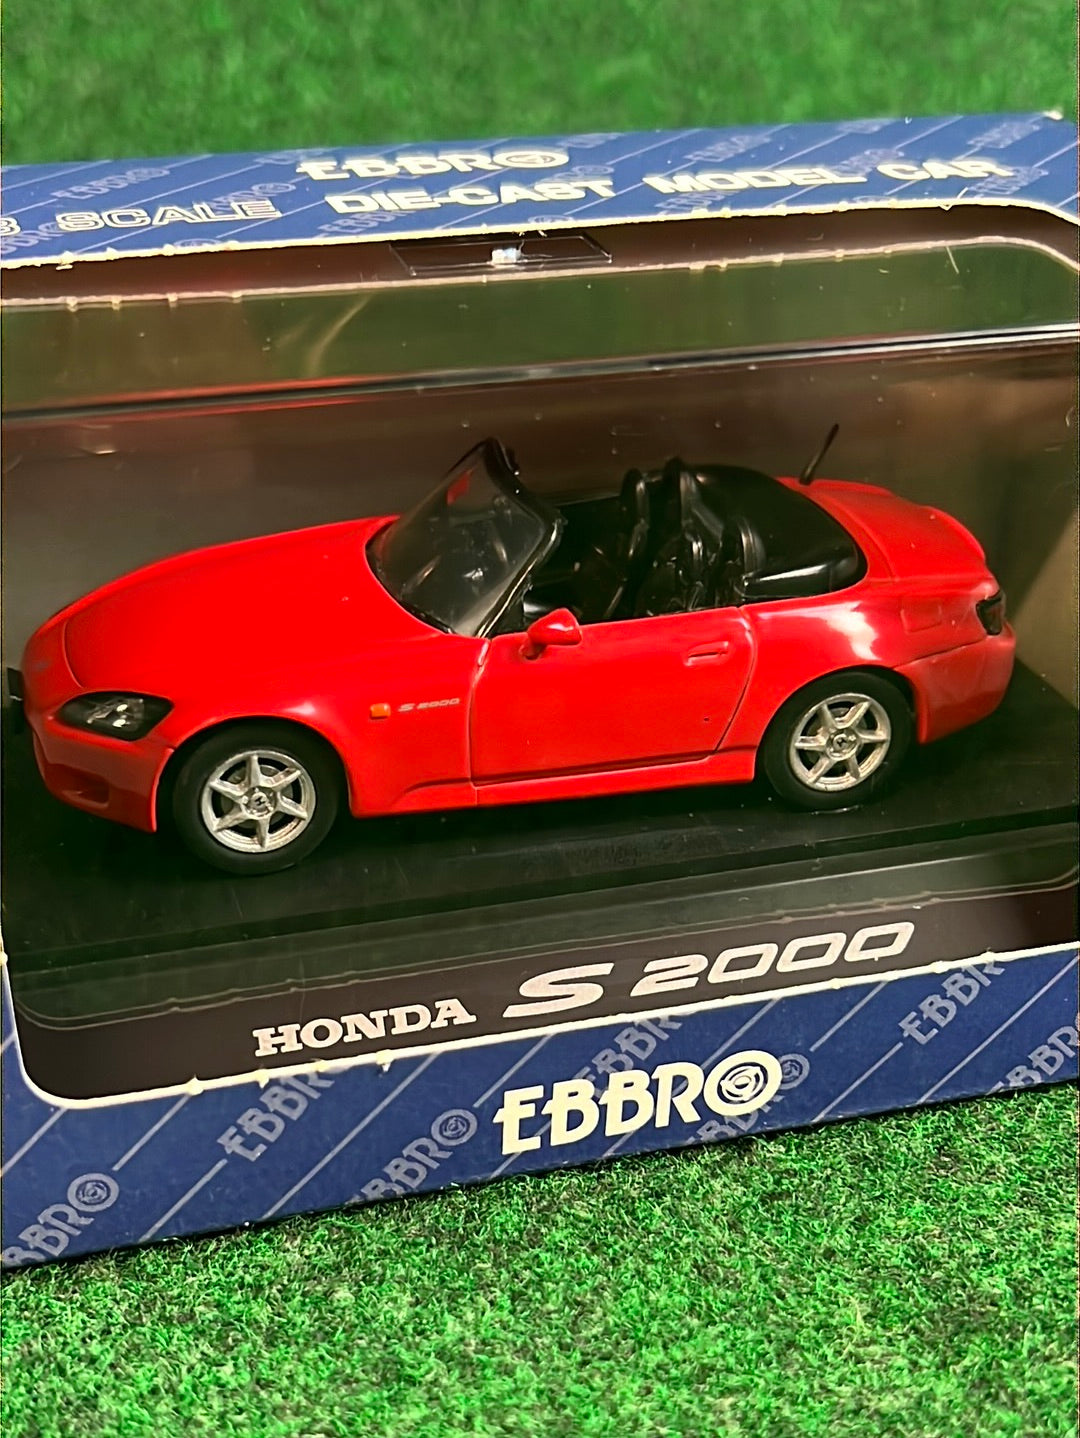 EBBRO 1999 Honda S2000 (New Formula Red) 1/43 Scale Diecast